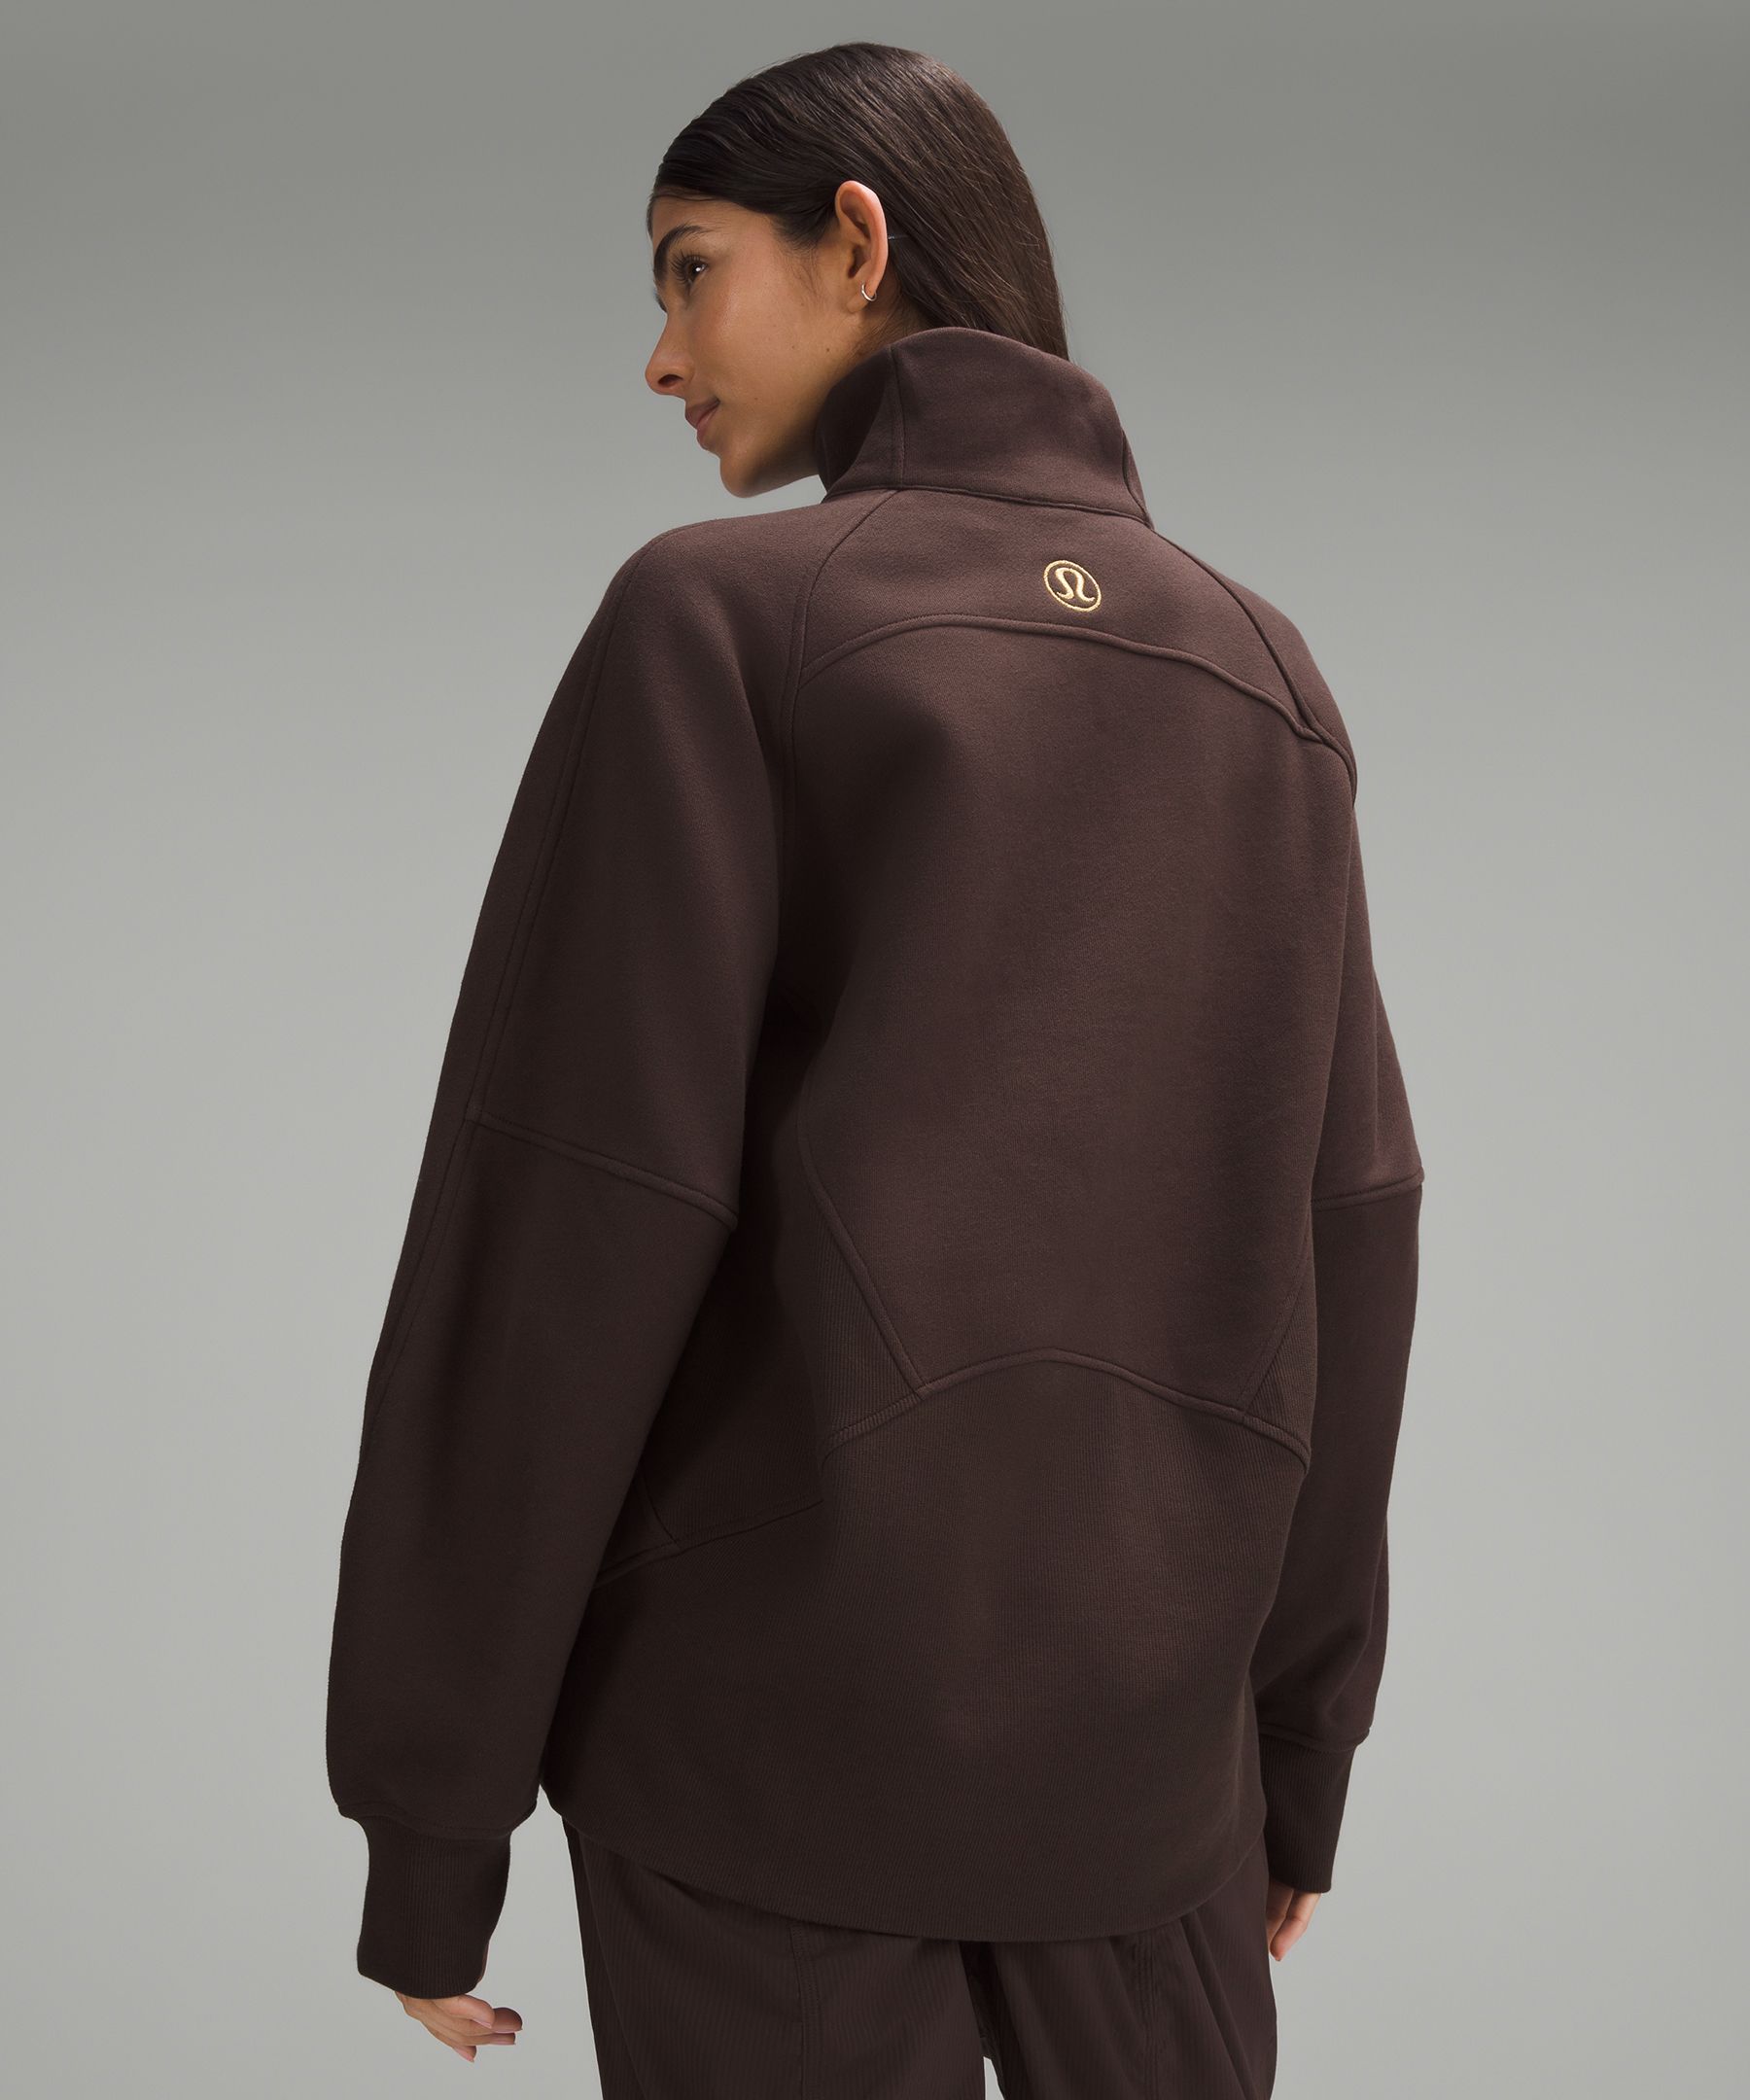 NWT Lululemon Scuba Oversized Half Zip Hoodie XL/XXL RPCR - Athletic apparel